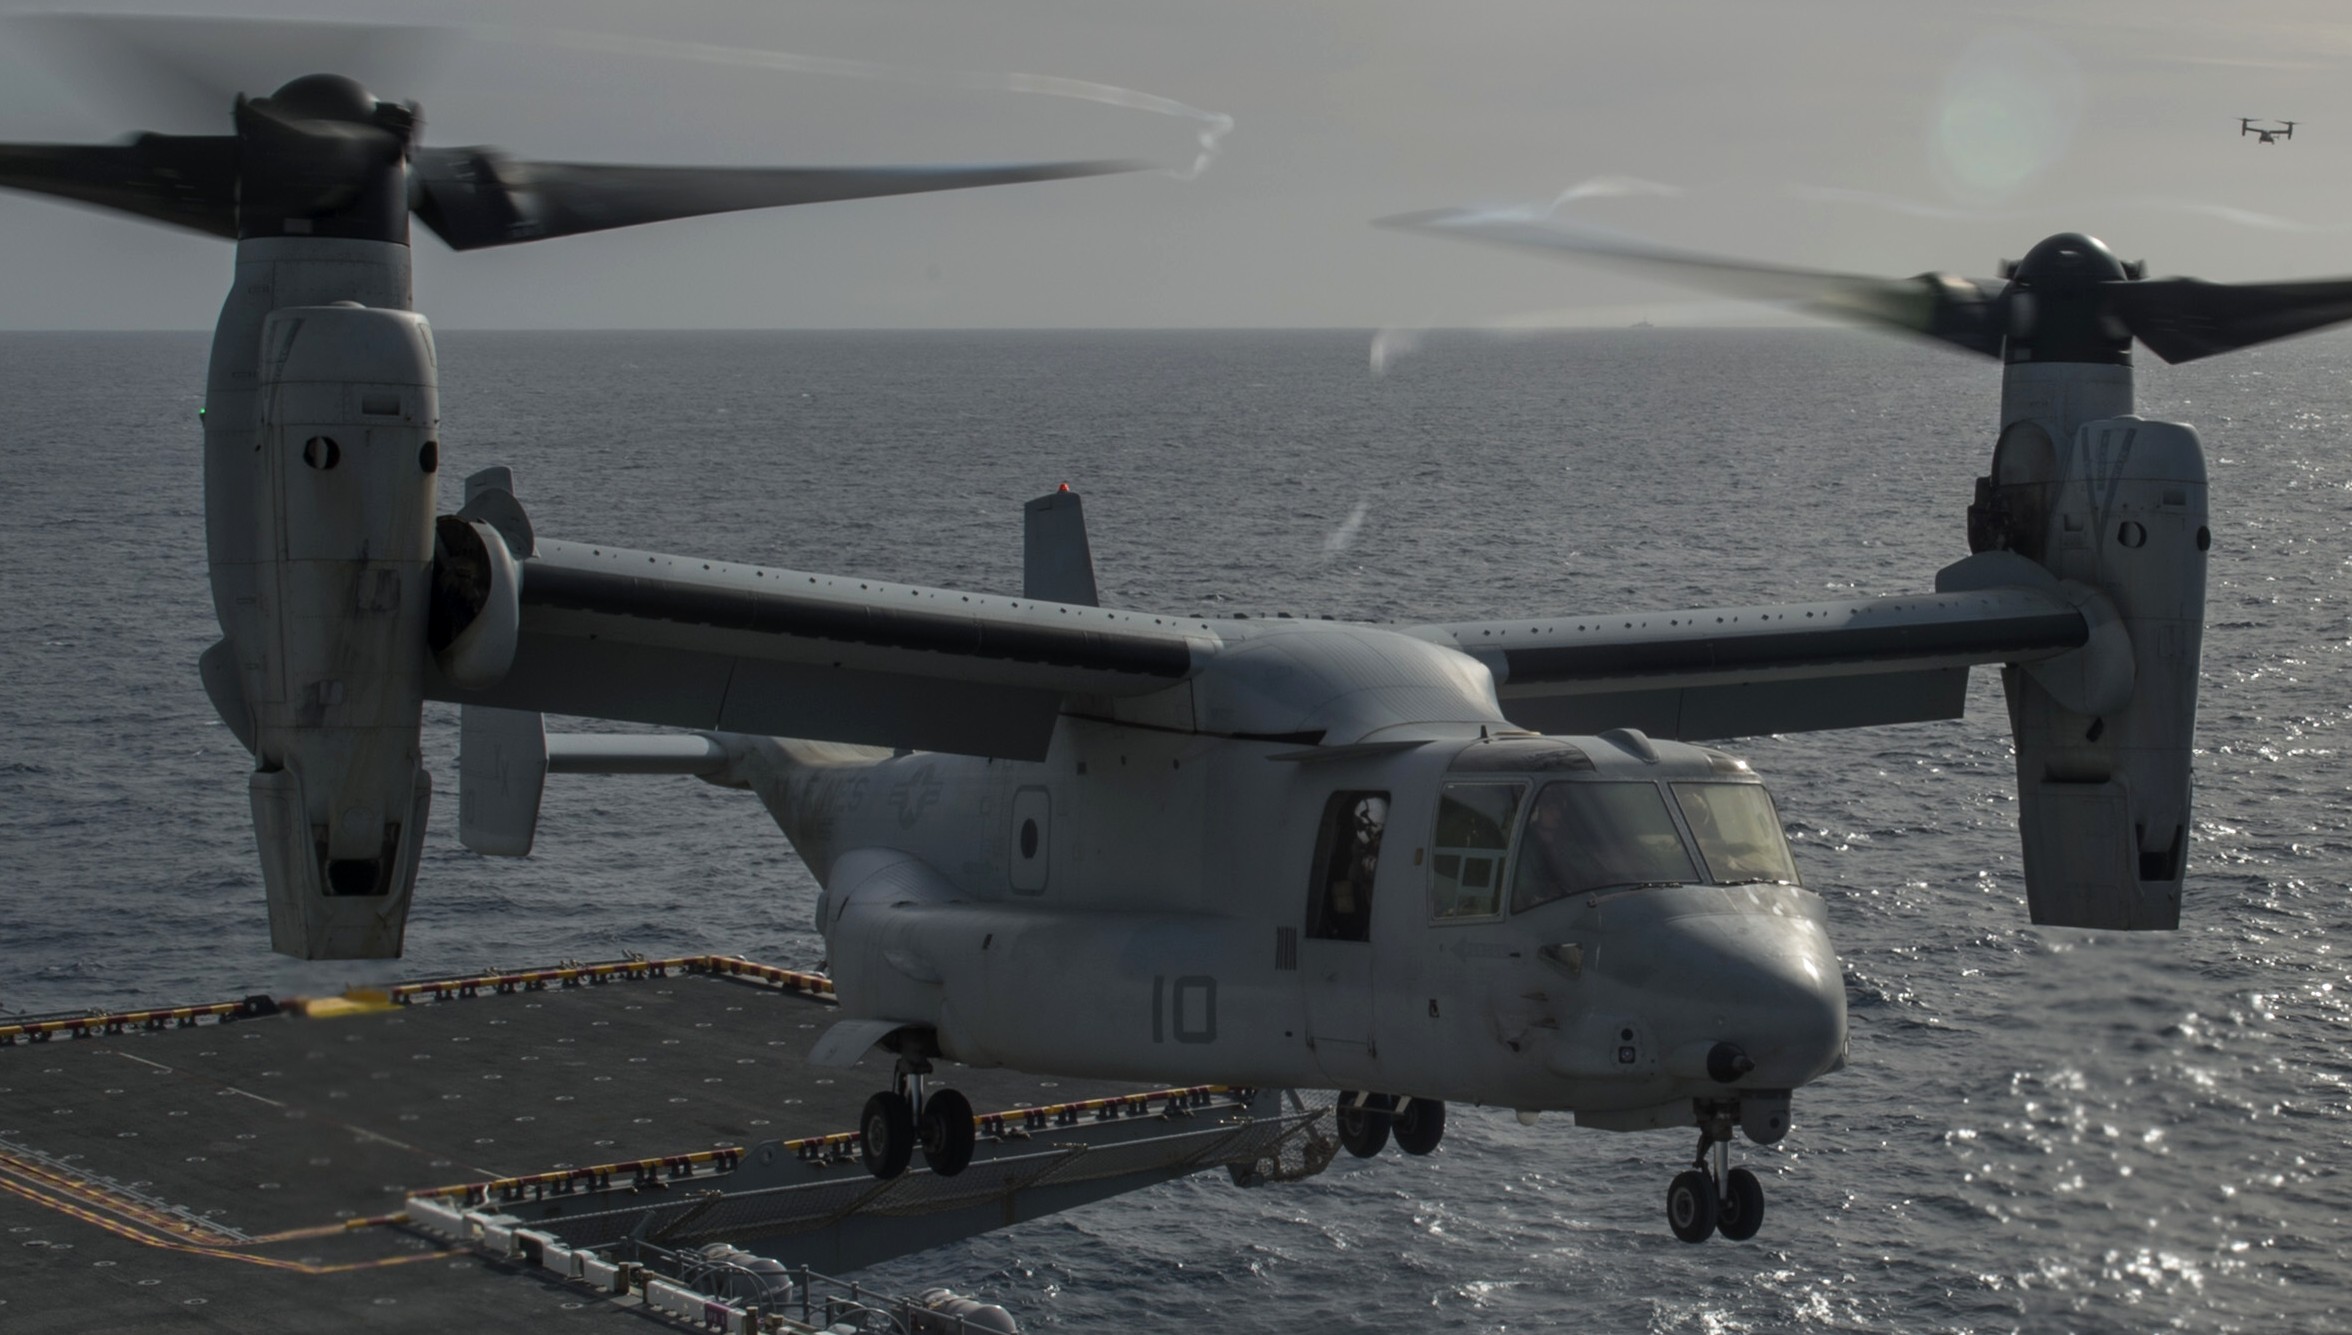 vmm-166 sea elk mv-22b osprey 2015 41